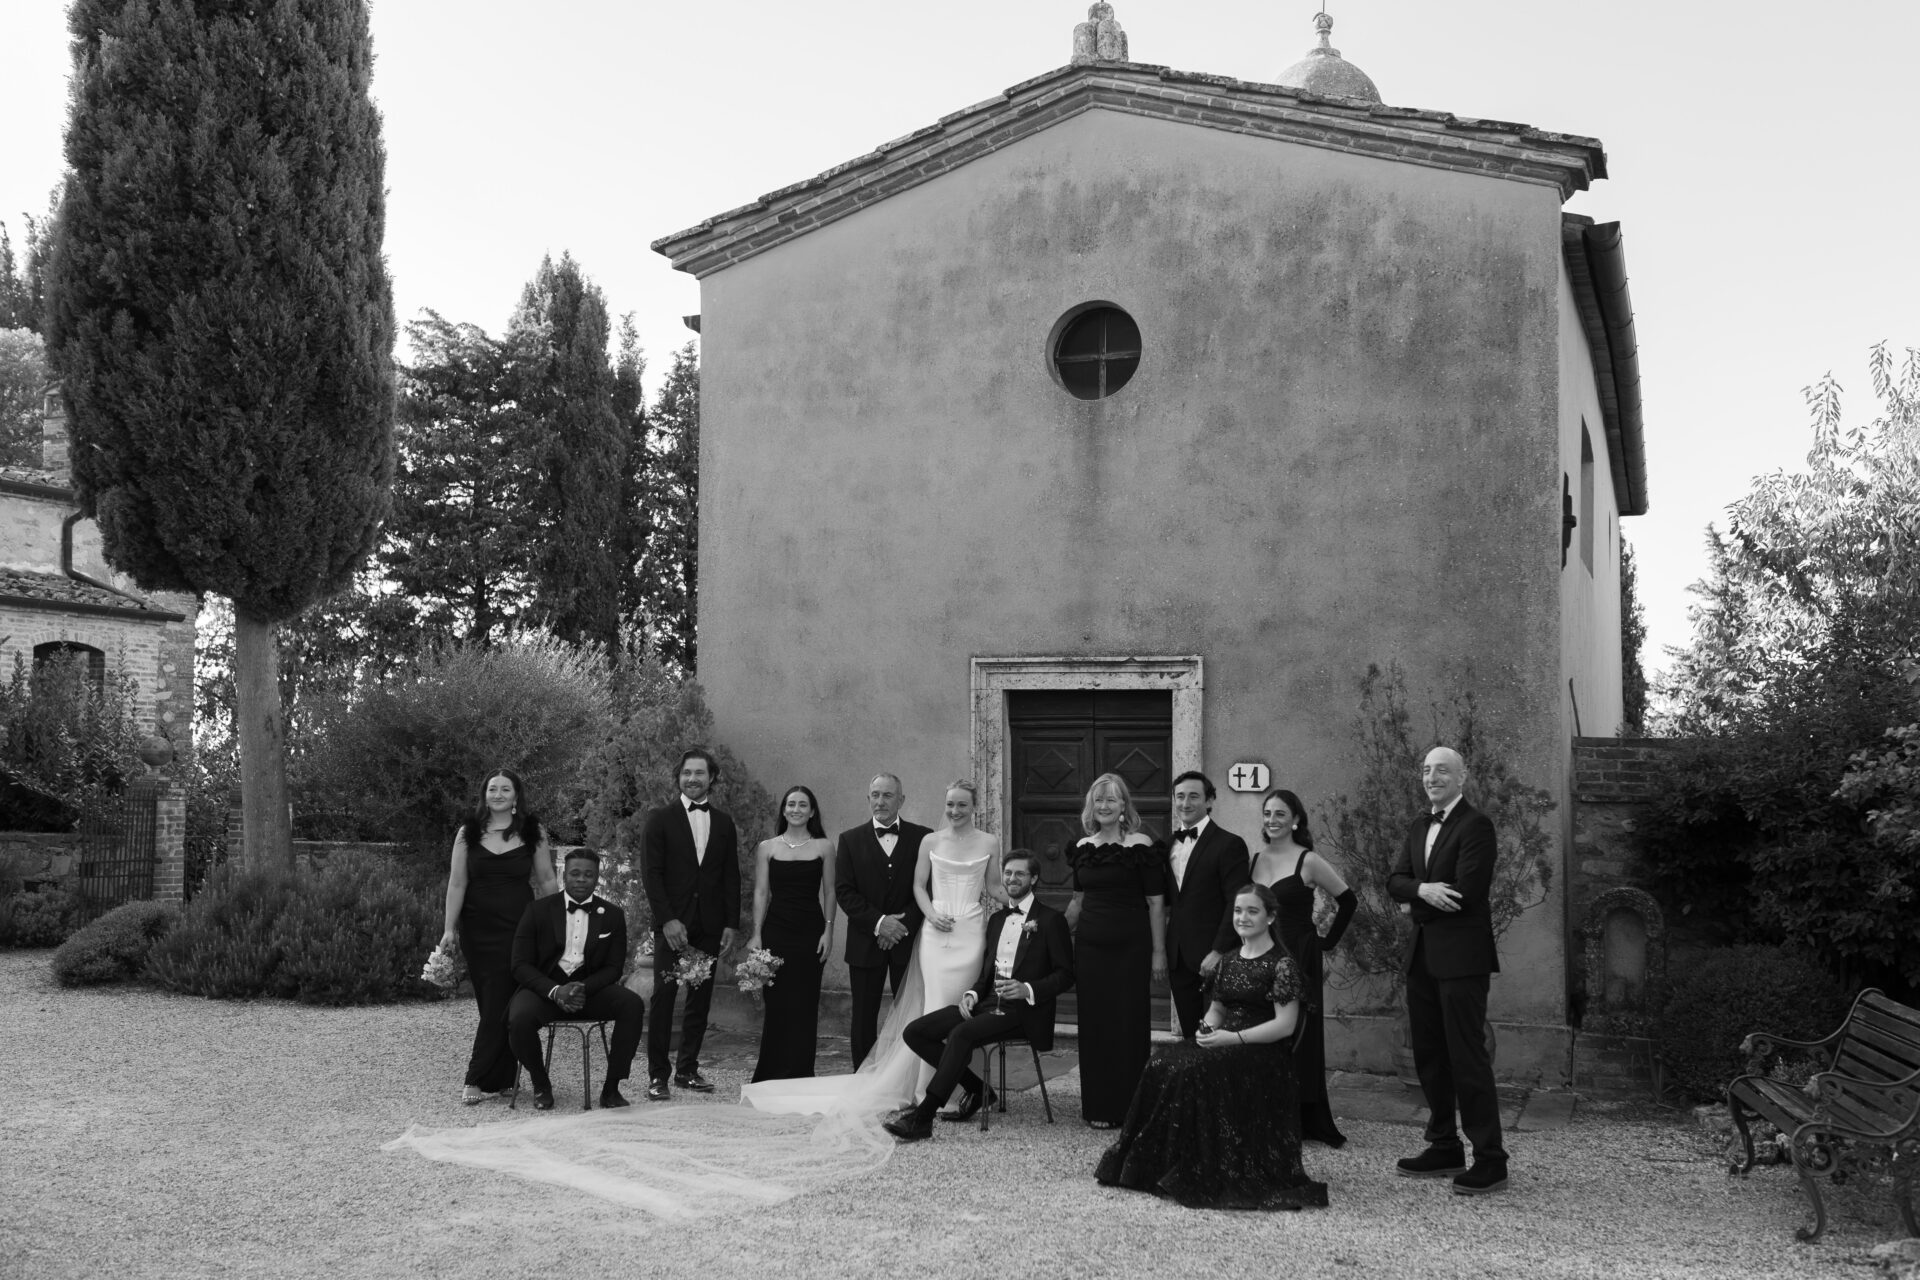 Italian wedding photography captures group photos at Tuscan wedding